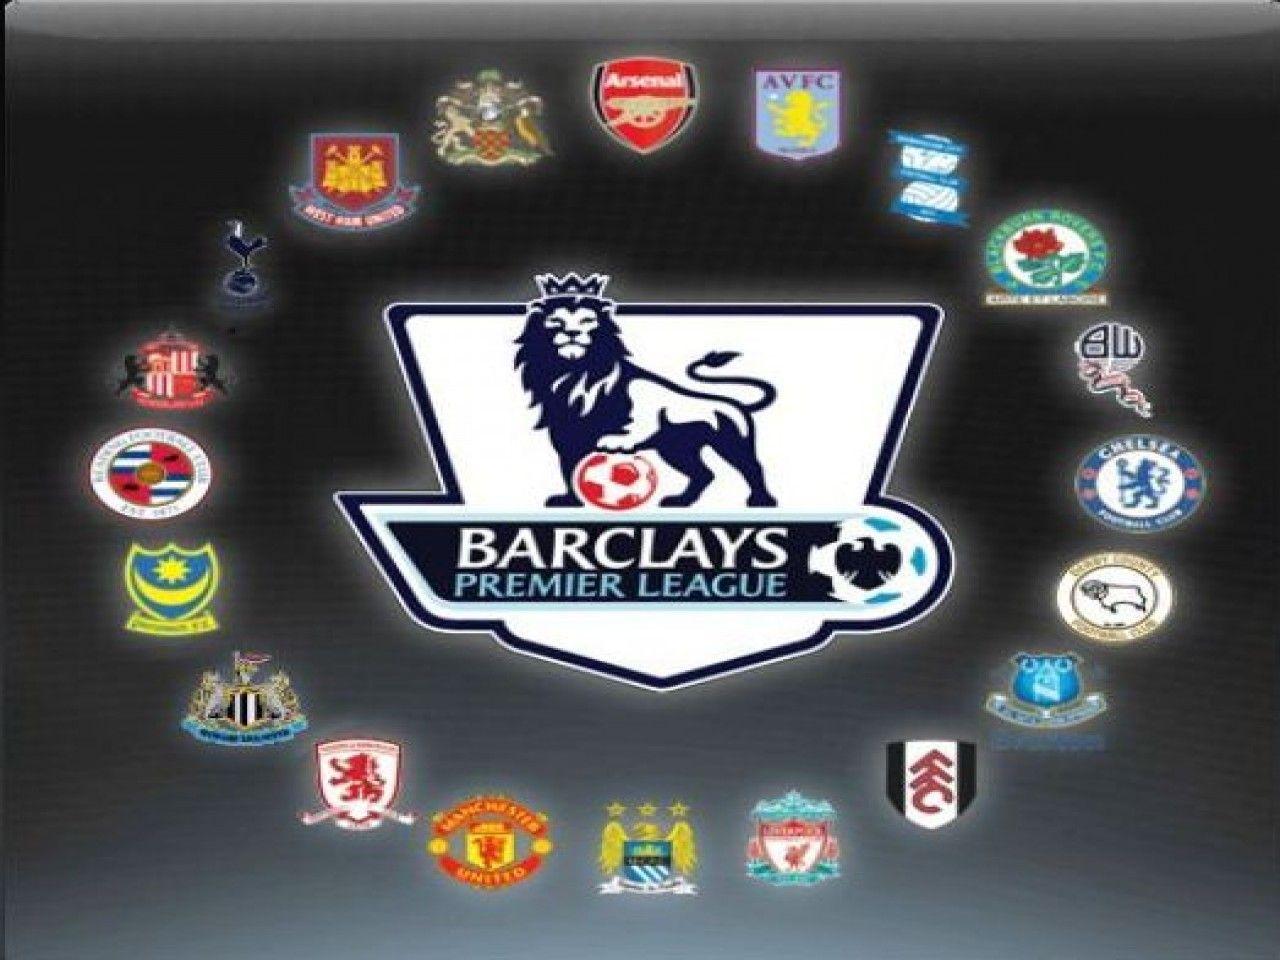 Barclays Premier League Wallpaper. Download cool HD